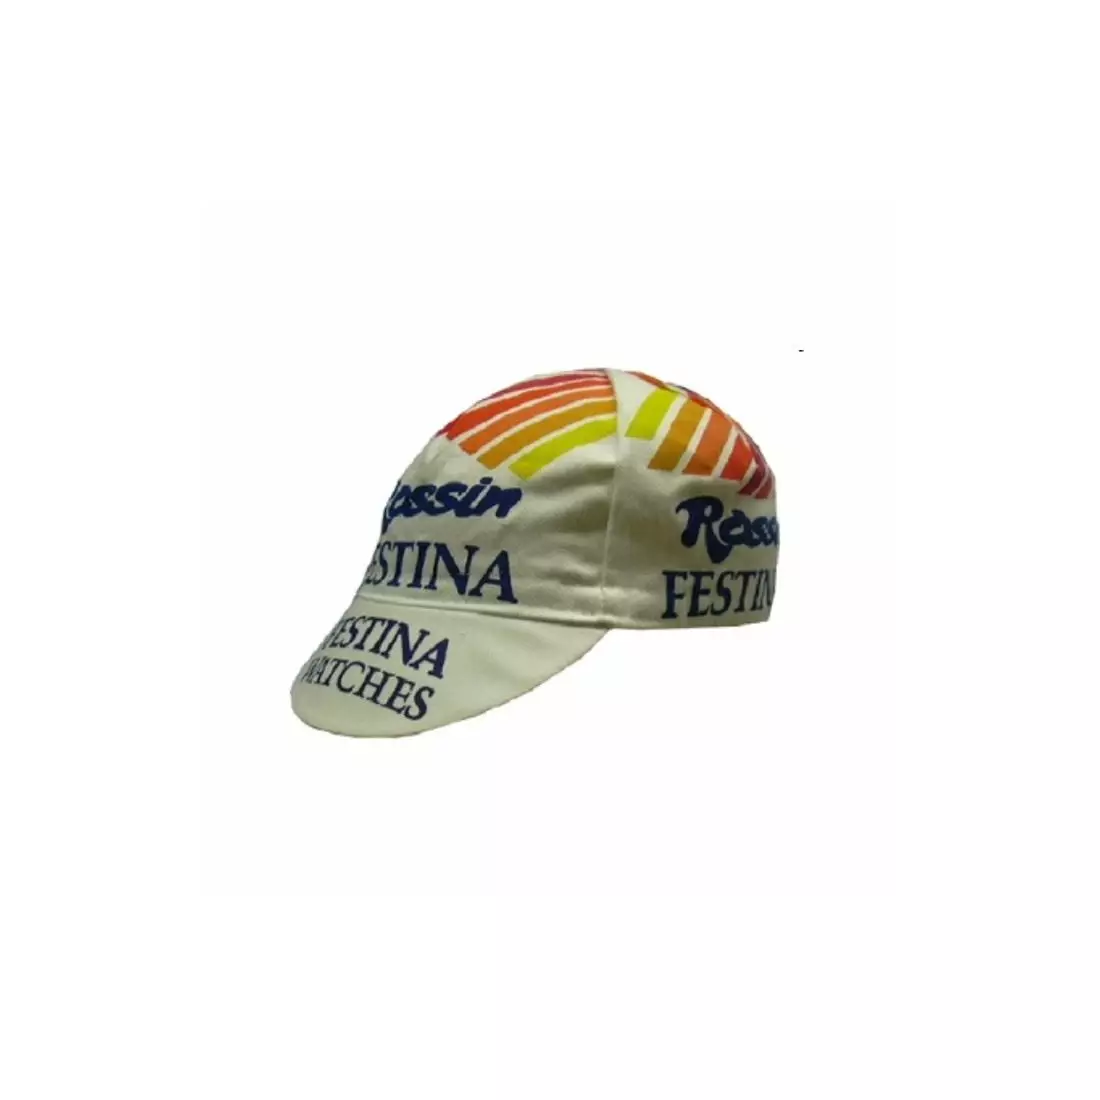 APIS PROFI FESTINA ROSSIN cycling cap with visor